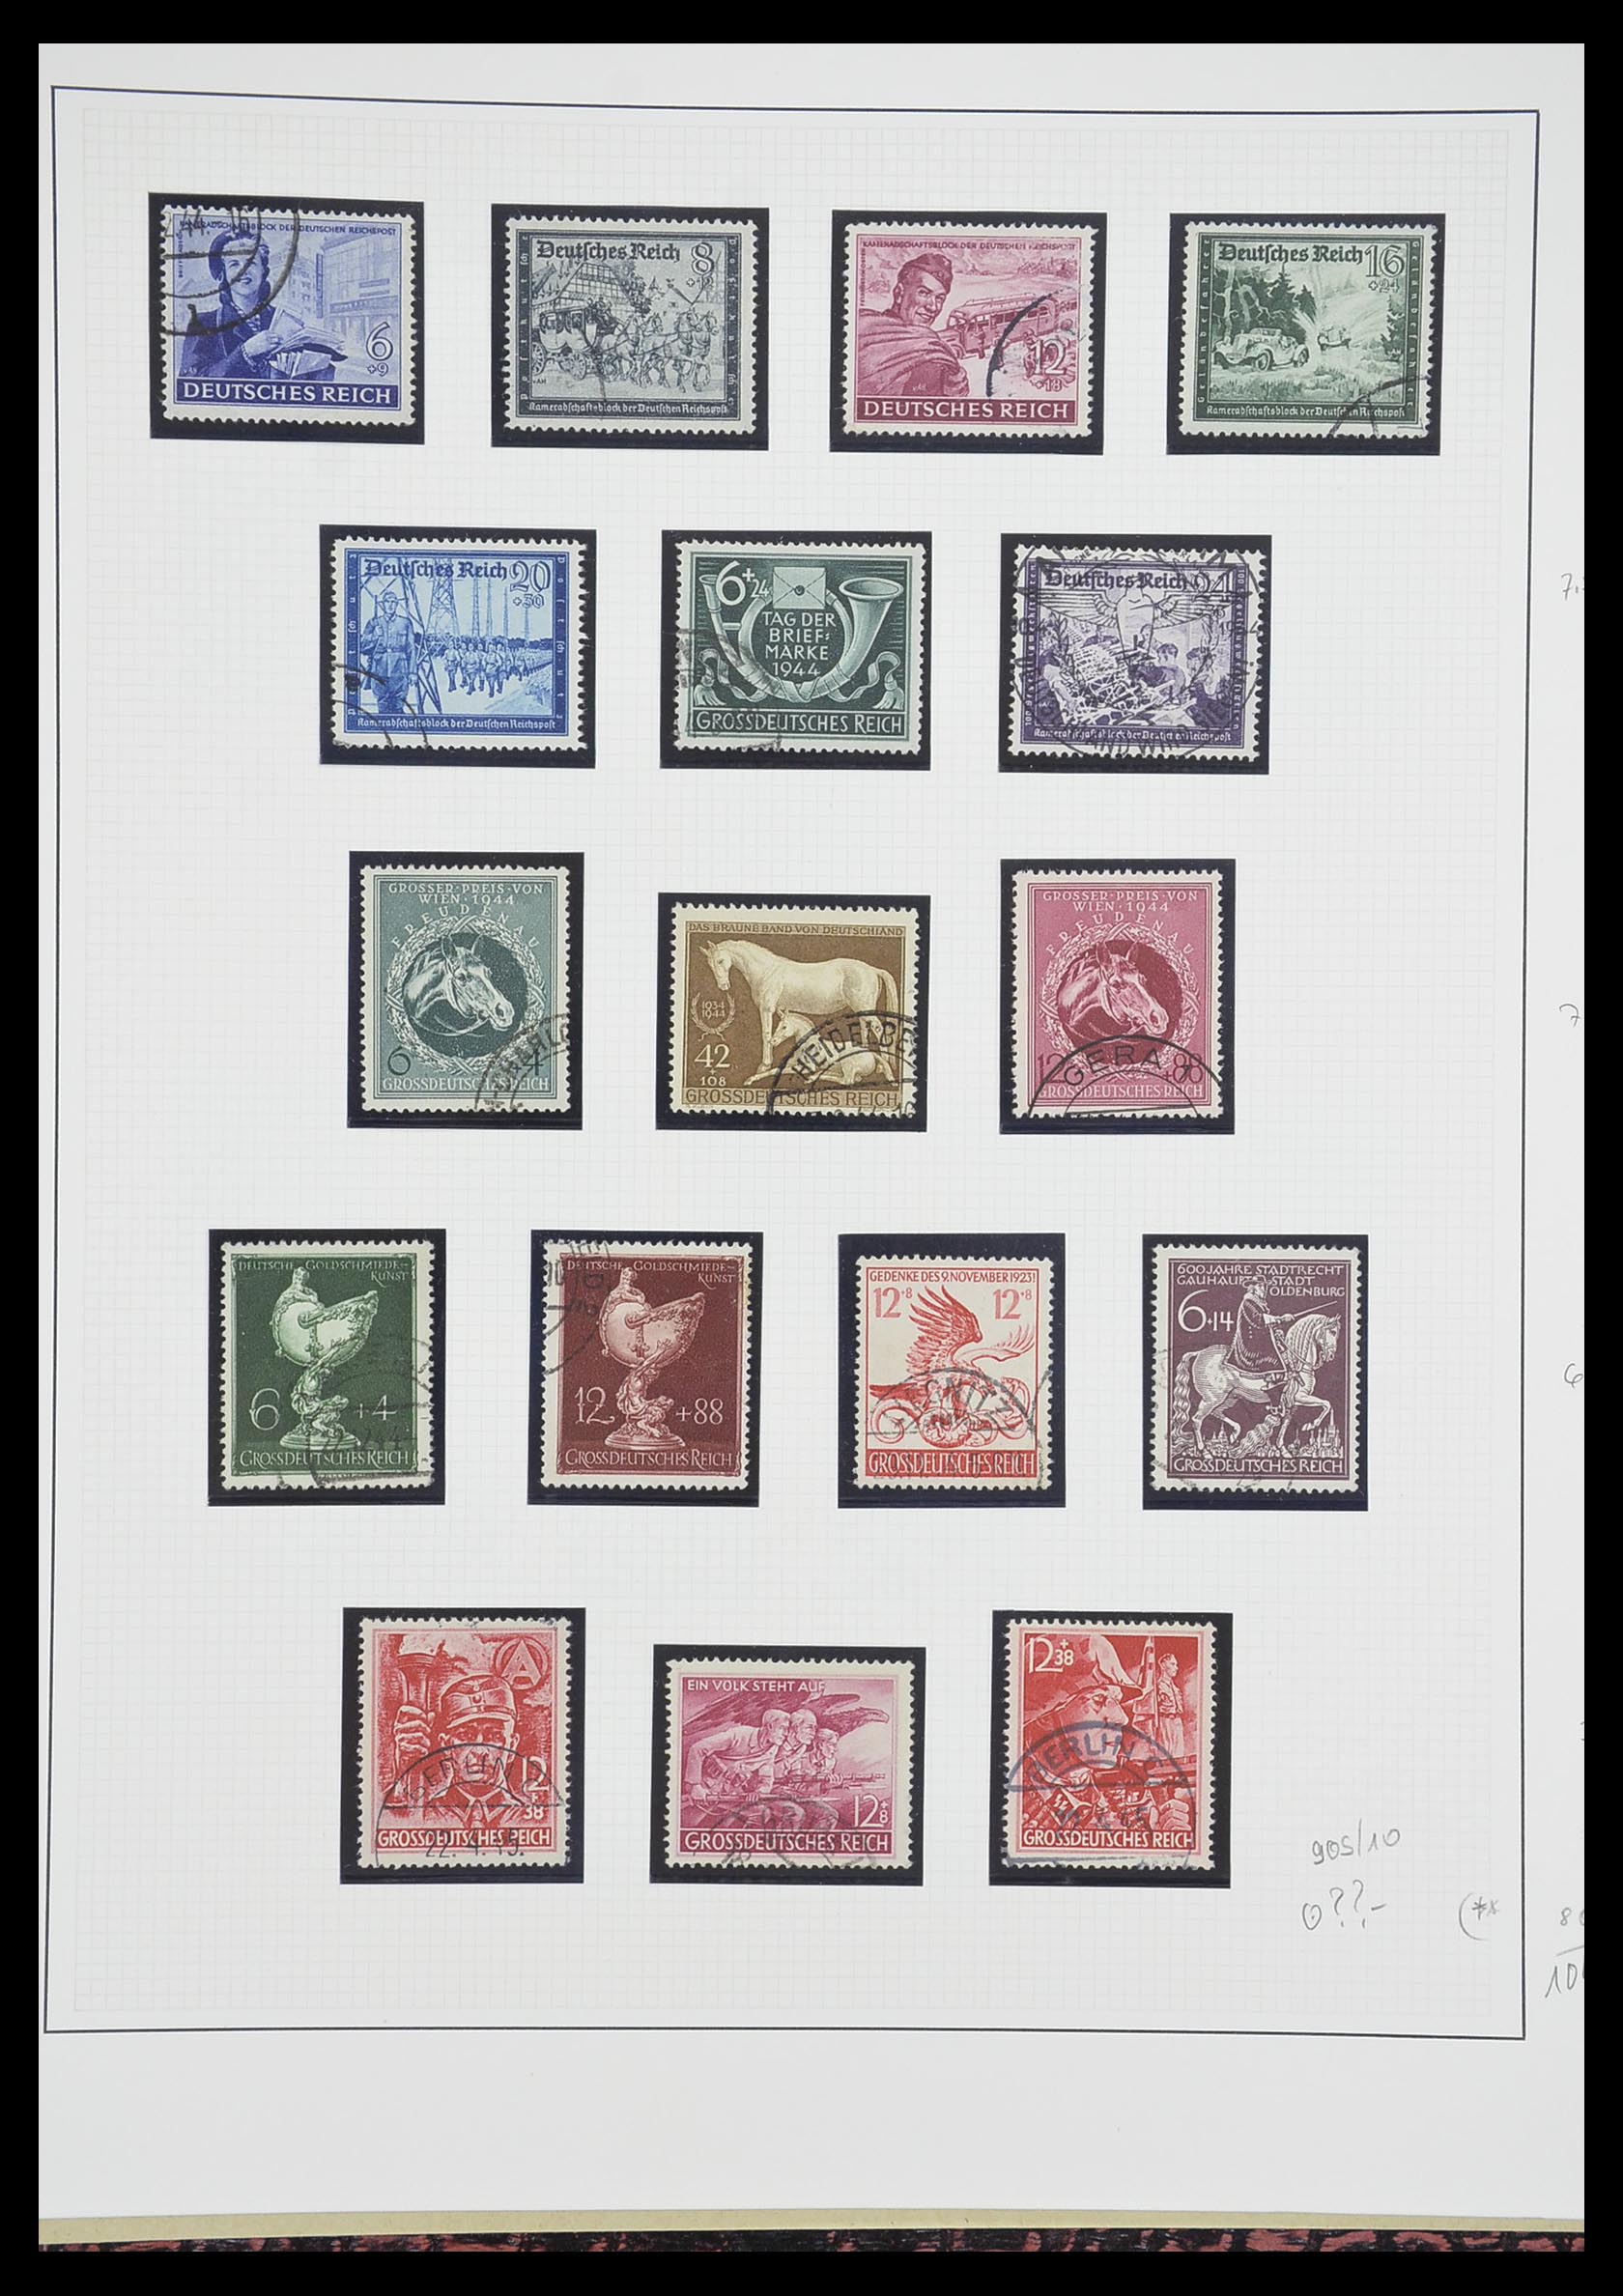 33222 040 - Stamp collection 33222 German Reich 1923-1945.